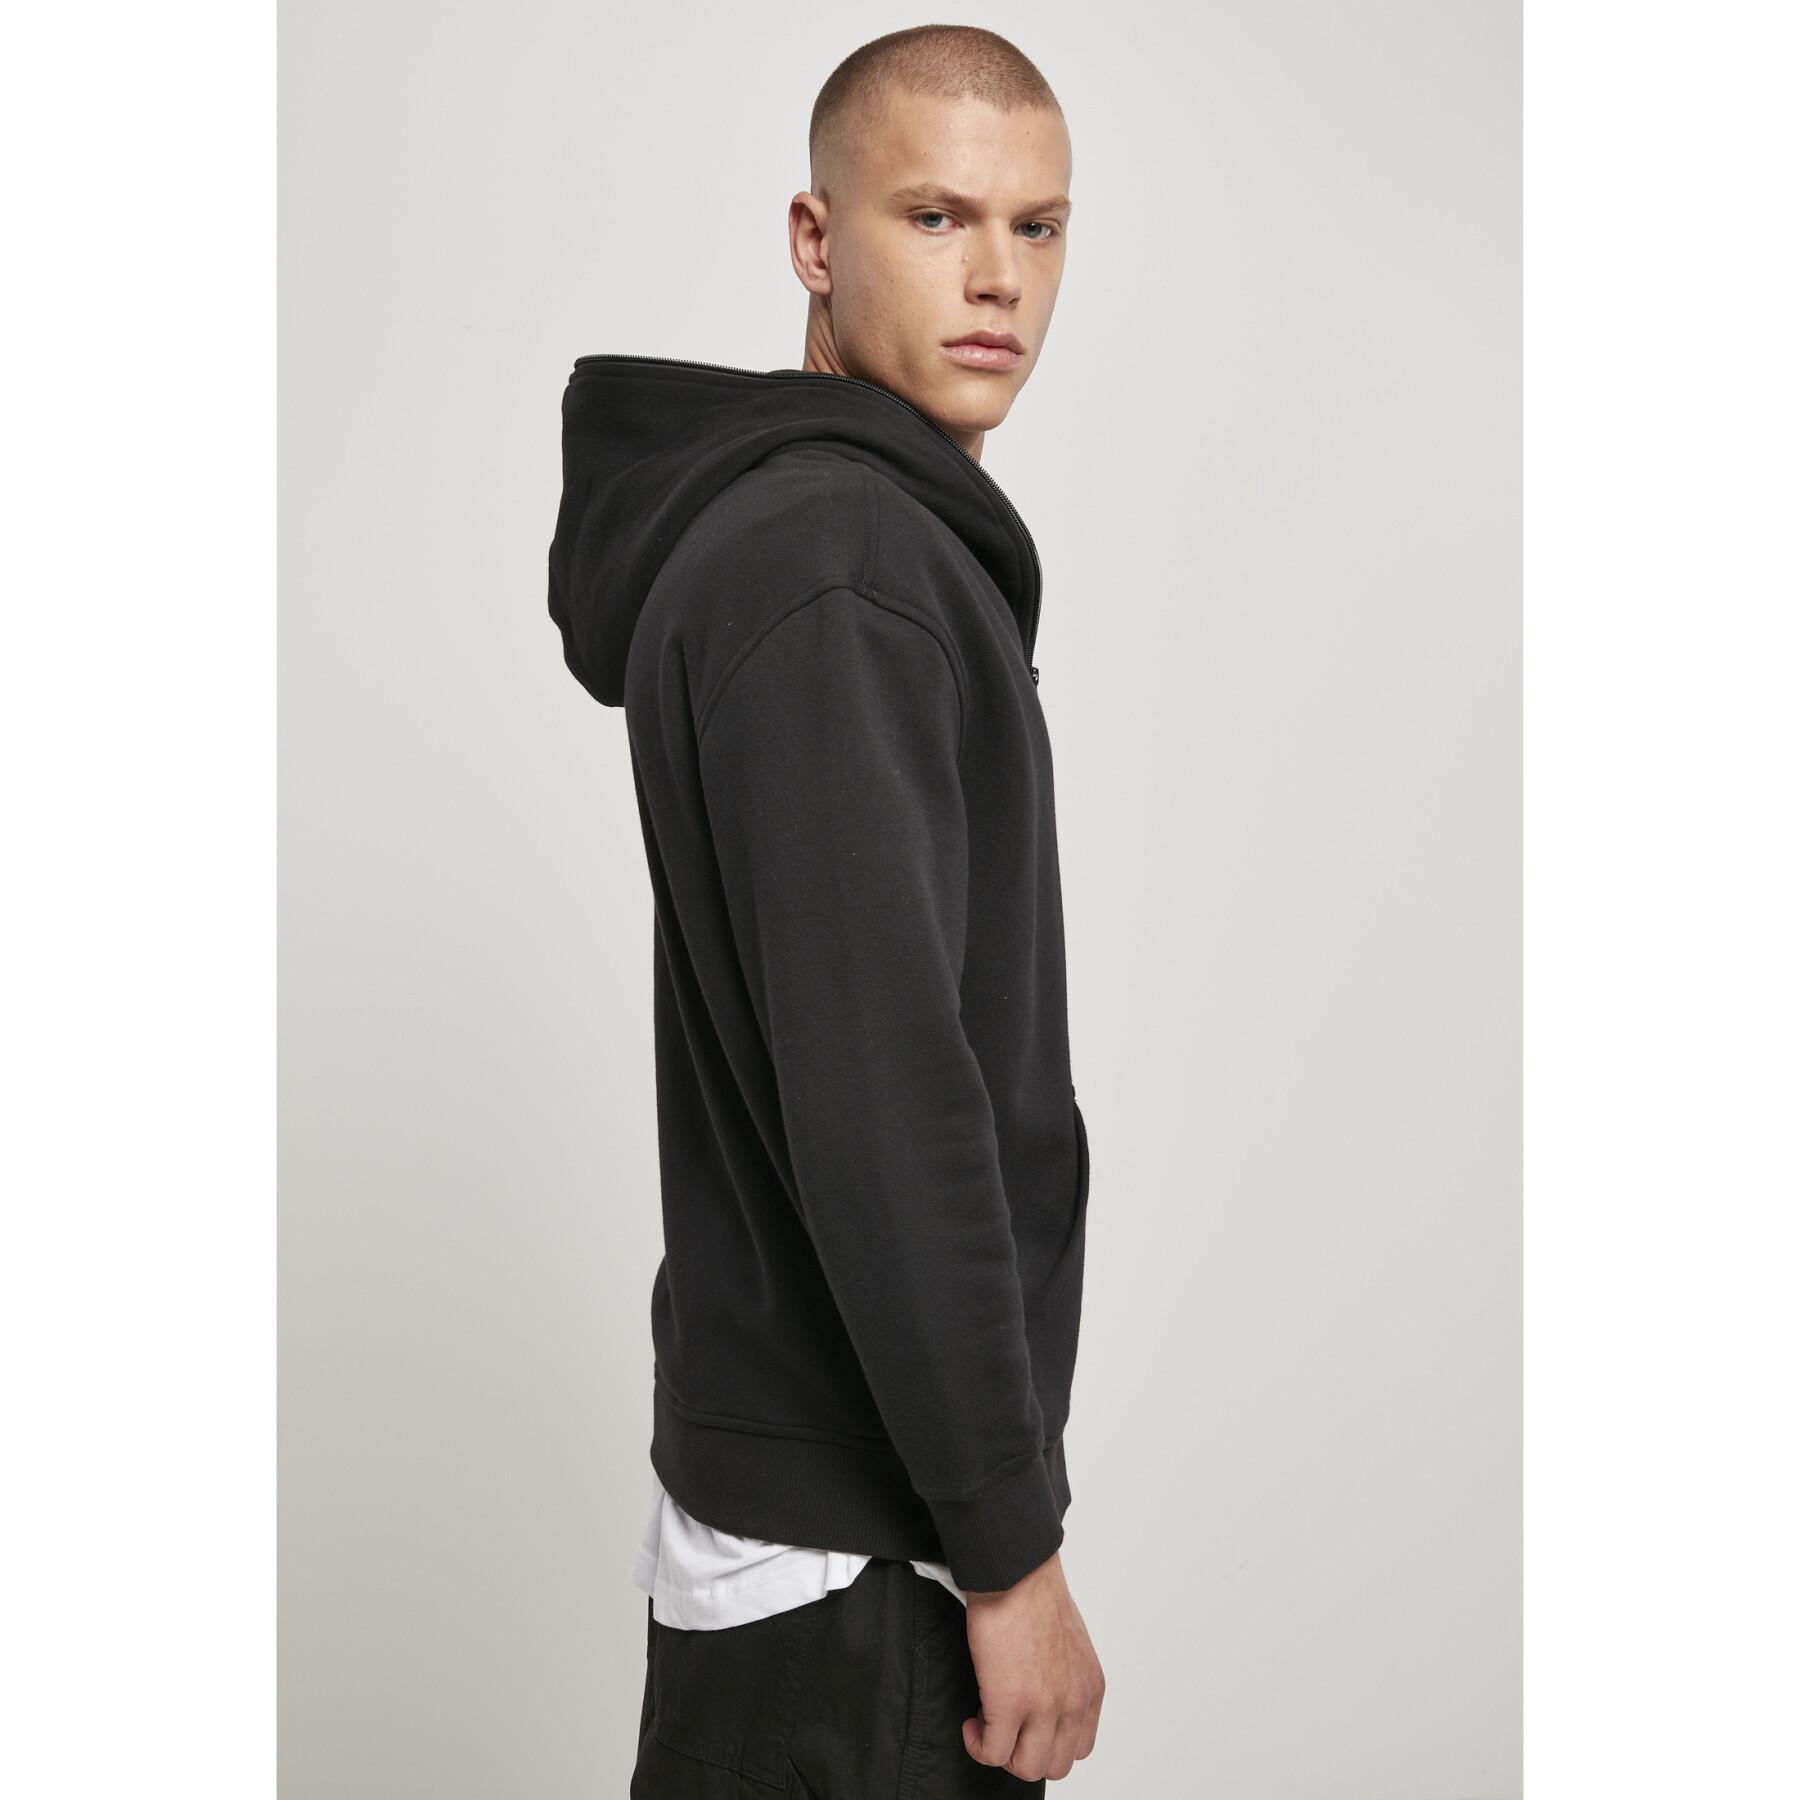 Hooded sweatshirt Urban Classics organic full zip (Grandes tailles)